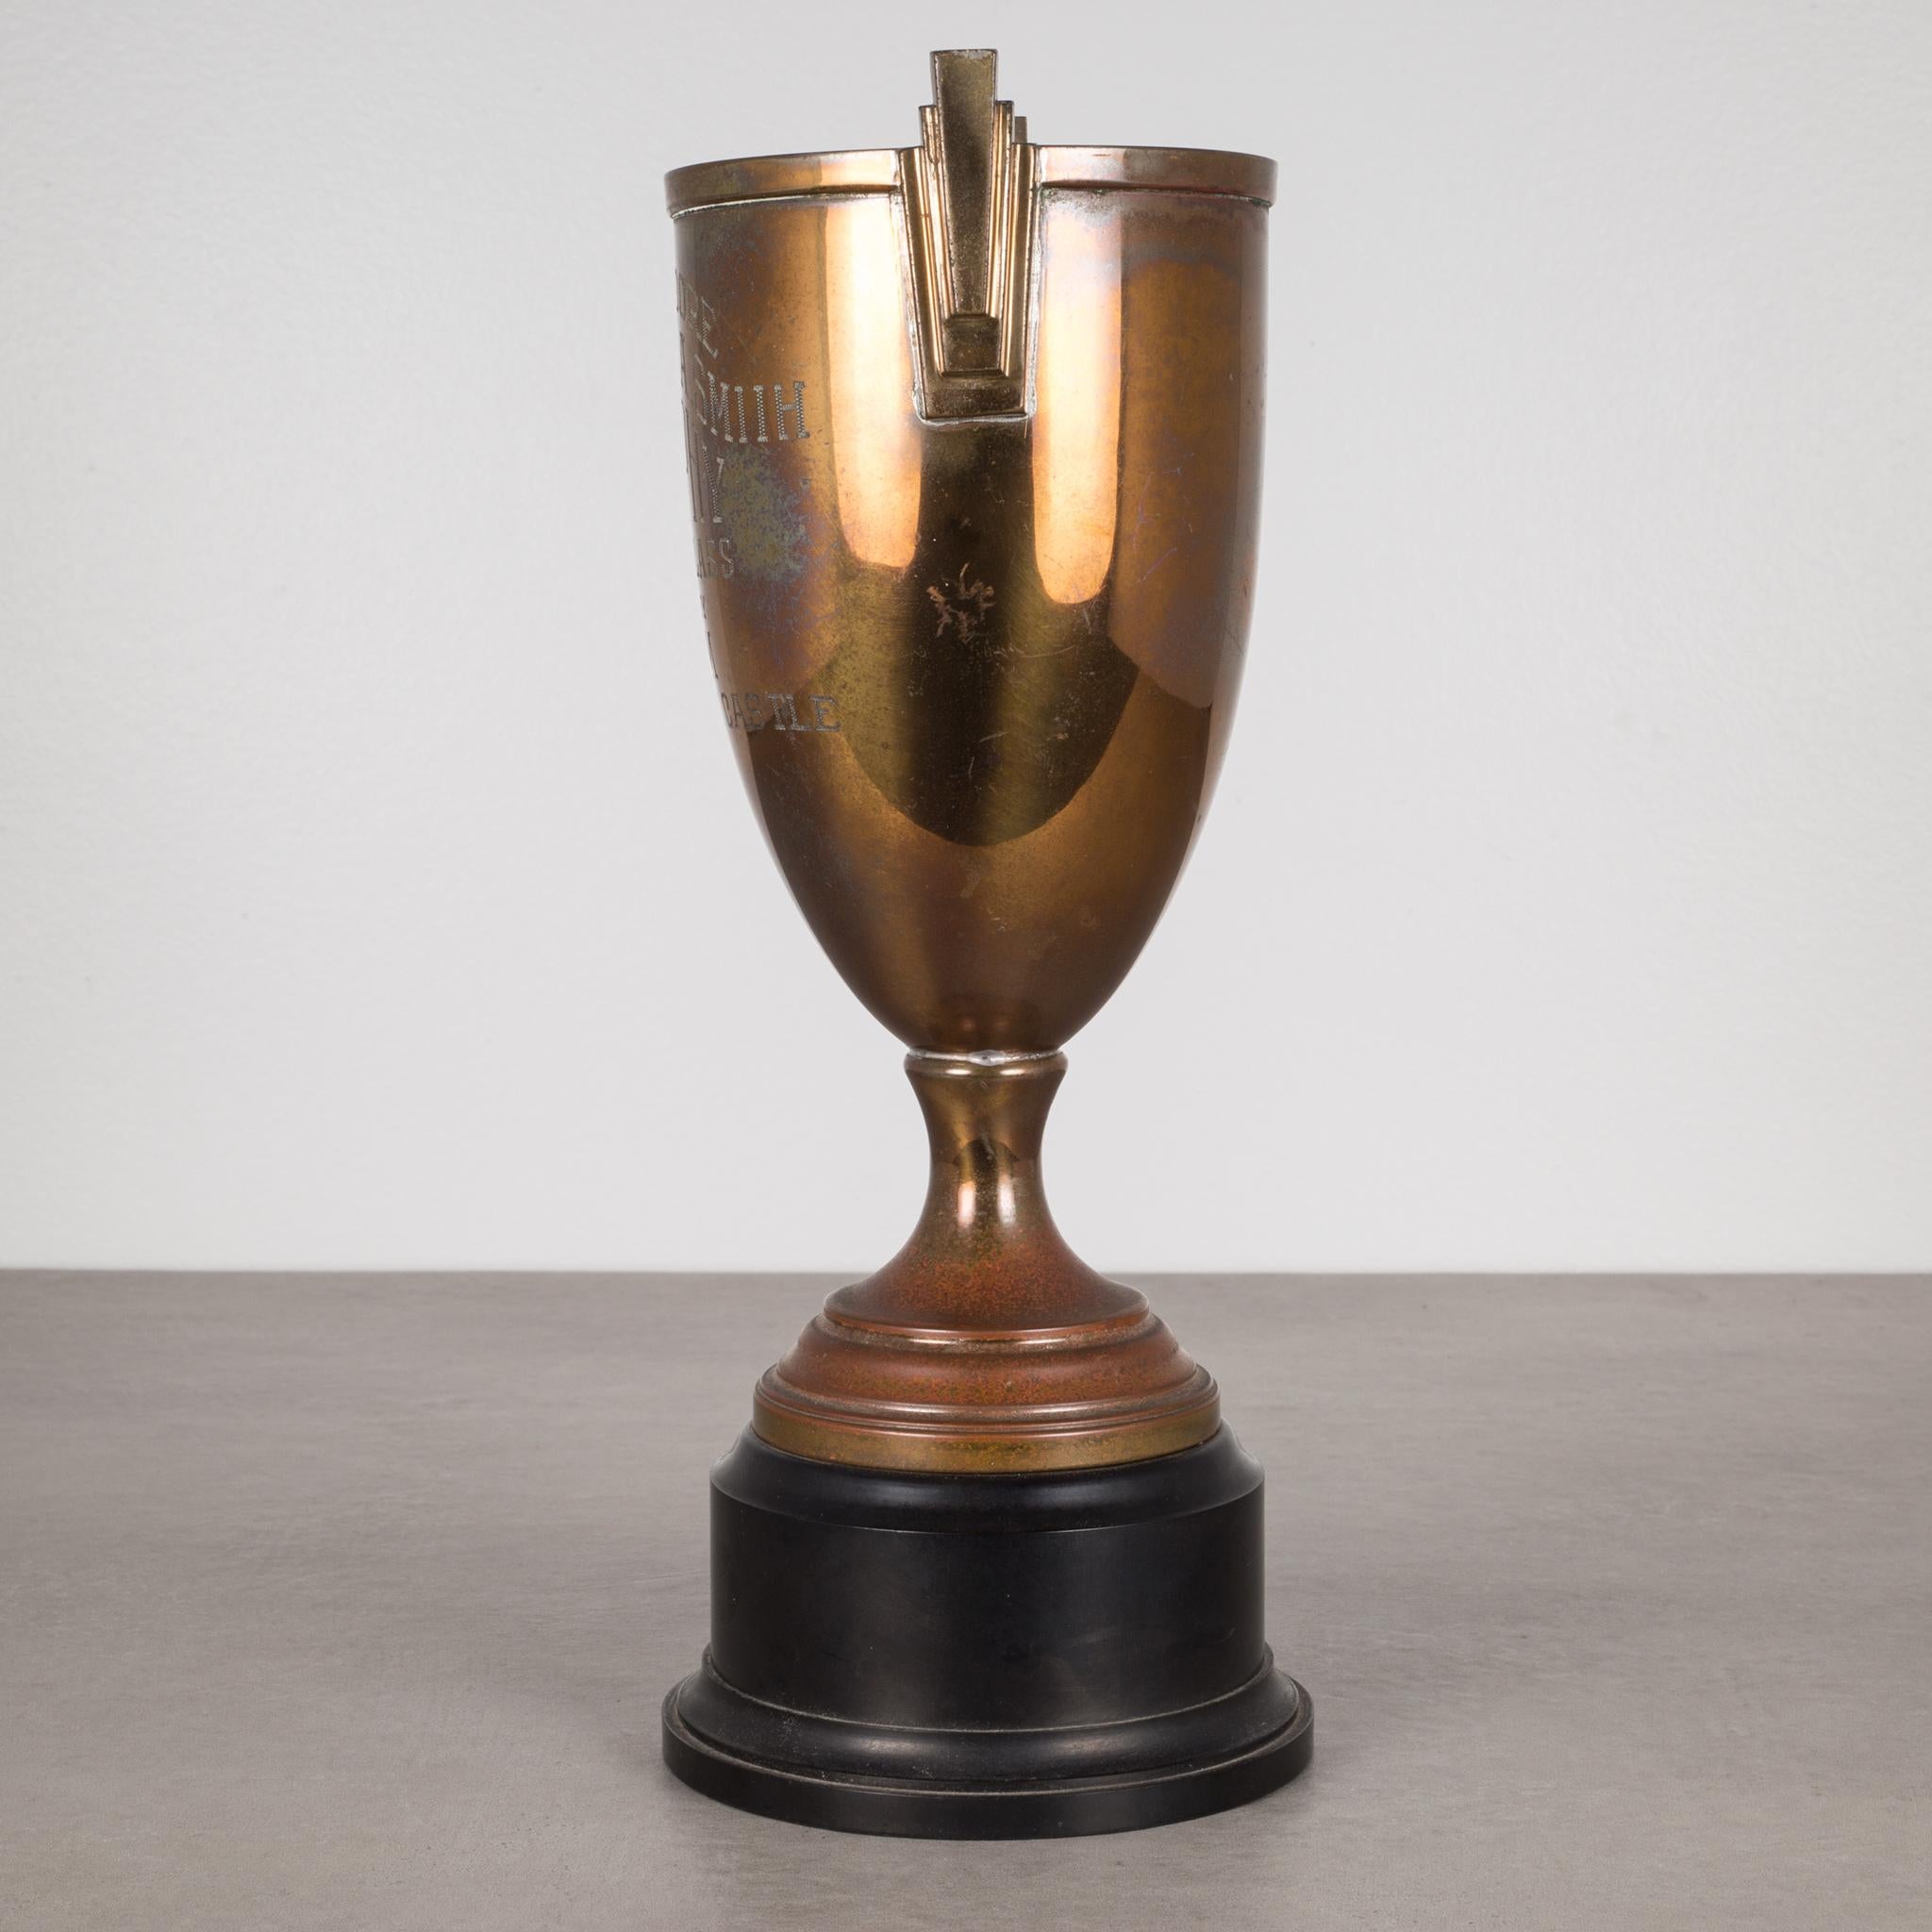 Art Deco Brass Plated Trophy Cup San Frnacisco Yacht Club c. 1930s